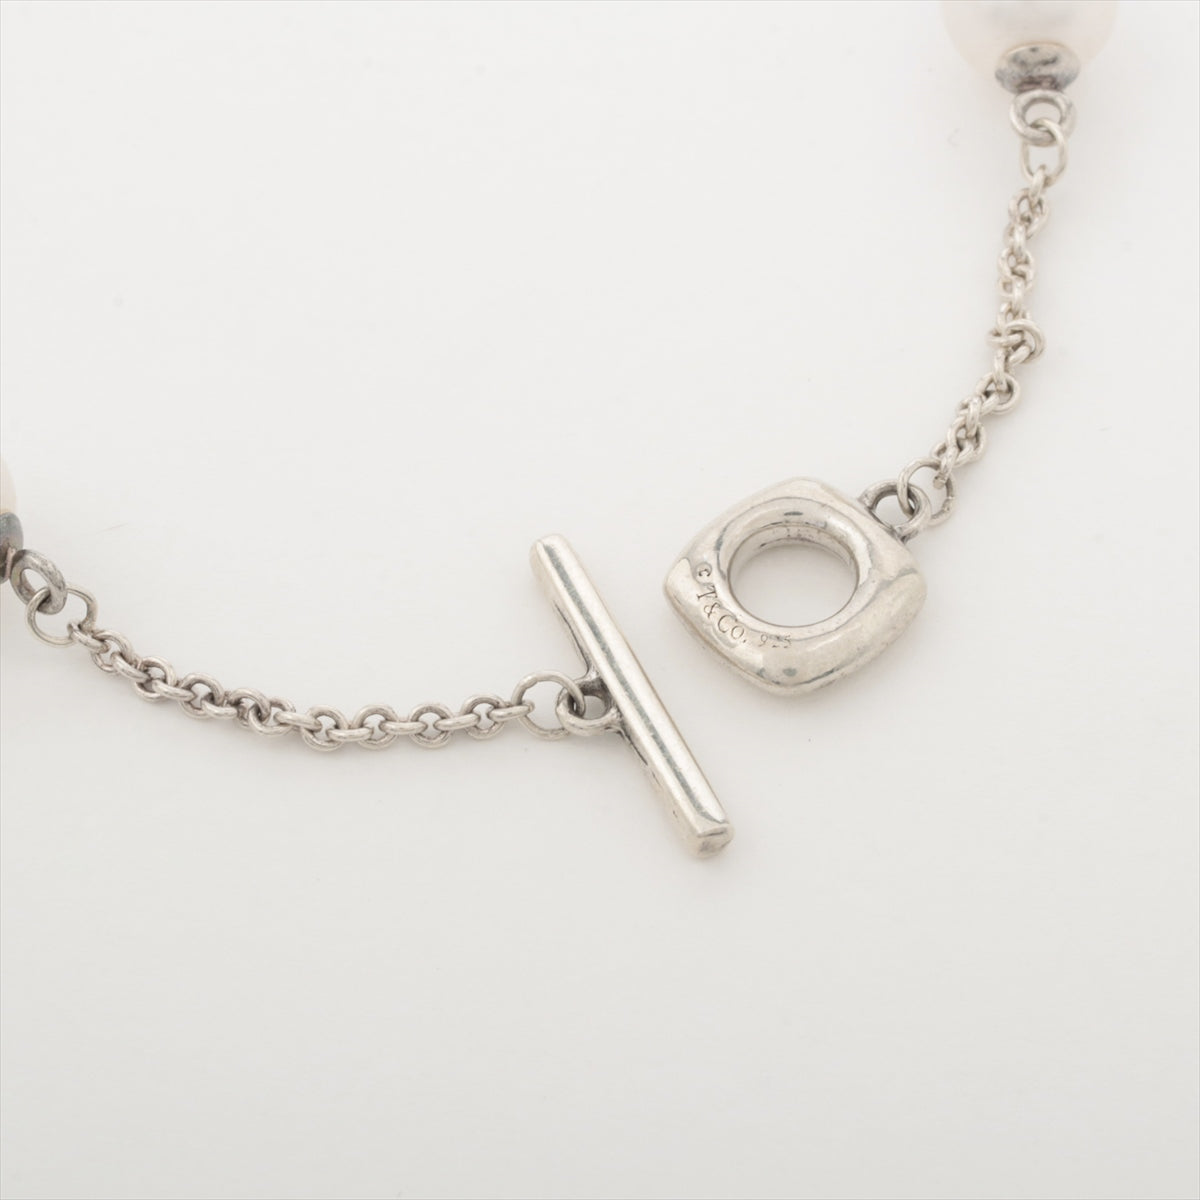 Tiffany open square Bracelet 925 x pearl 5.2g Silver